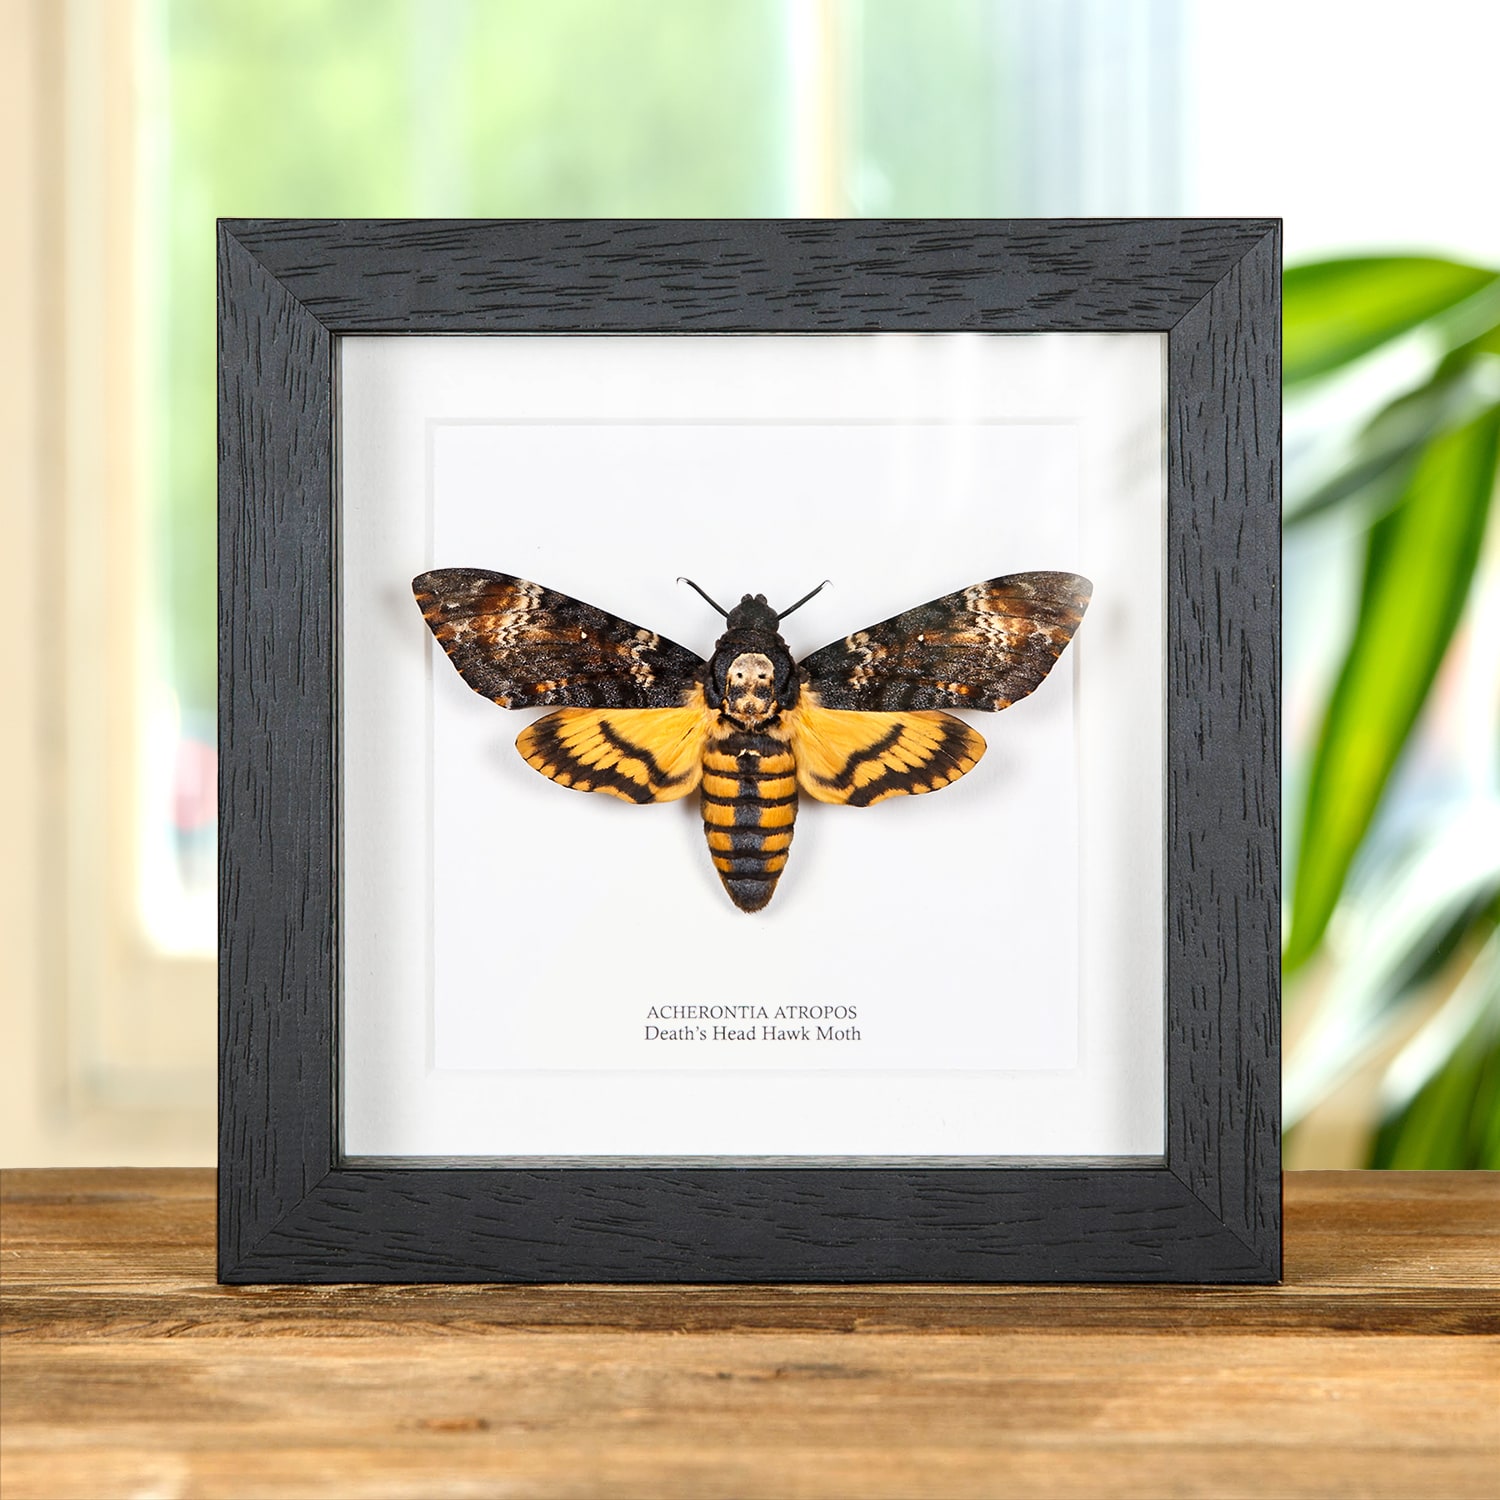 Deaths Head Hawk Moth in Box Frame (Acherontia atropos)